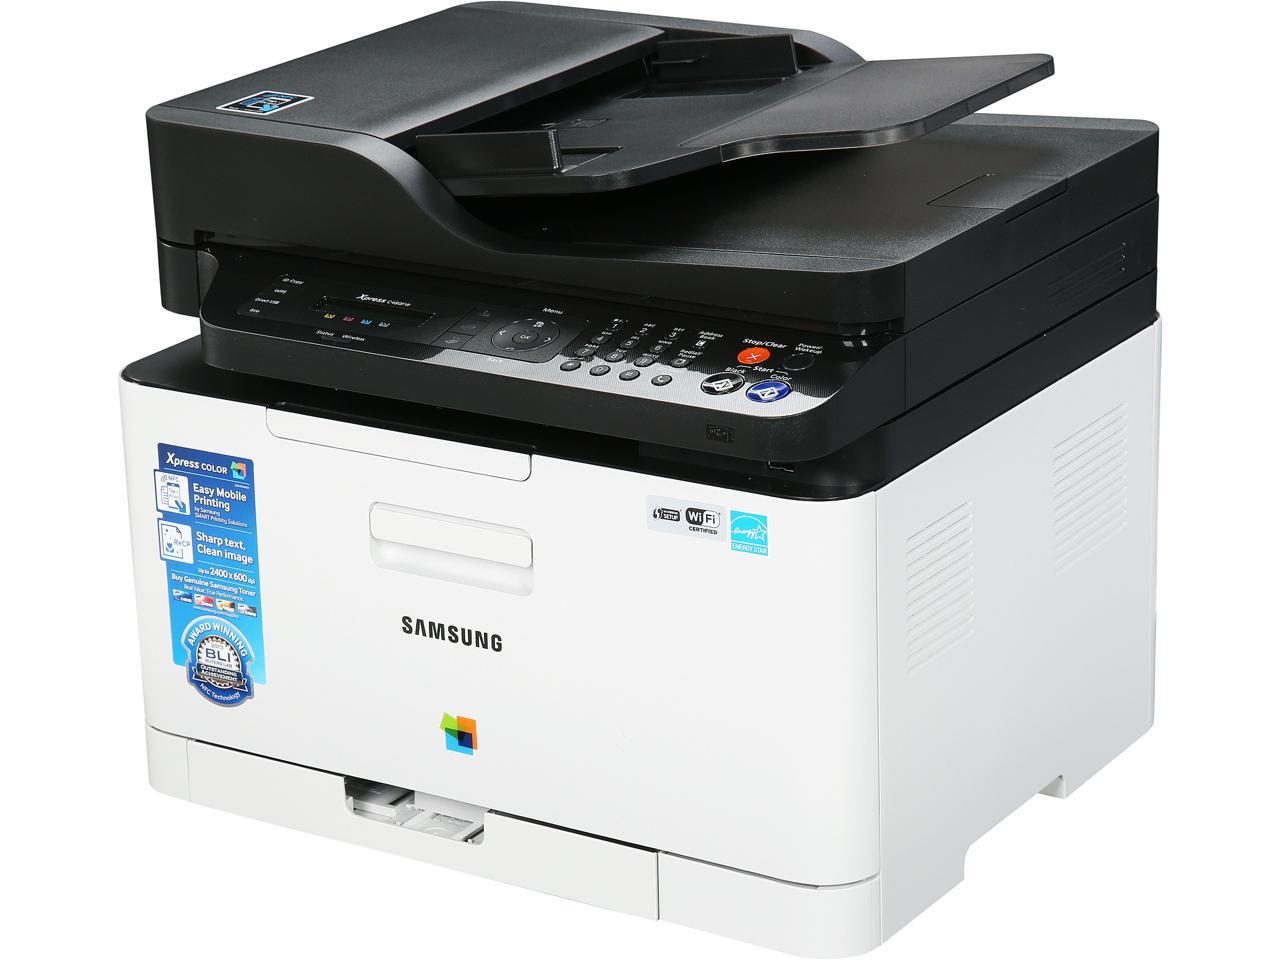 Samsung 480. Принтер Samsung Xpress c480. Samsung Xpress SL-c480fw. МФУ Samsung m3870fd. Samsung Xpress SL-m2870fd Laser Multifunction Printer.